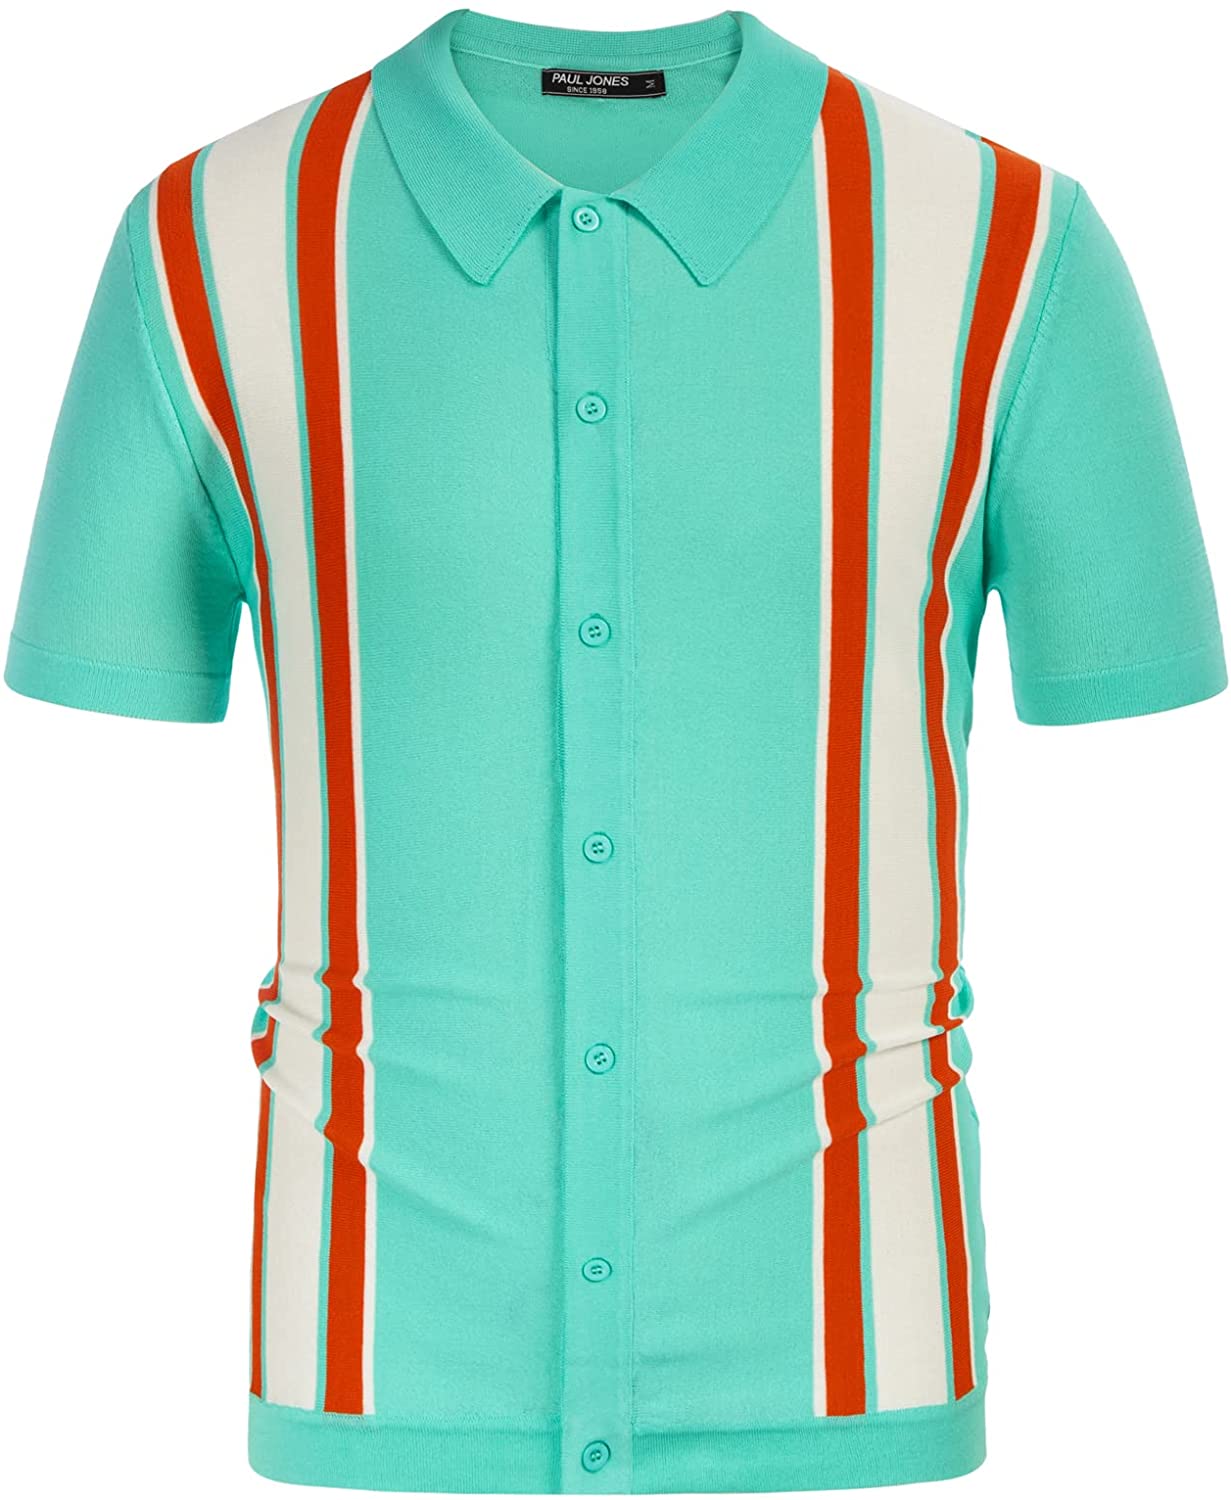 Pj Paul Jones Mens Polo Shirts Vintage Striped Lightweight Knitting Golf Shirts Ebay 5994